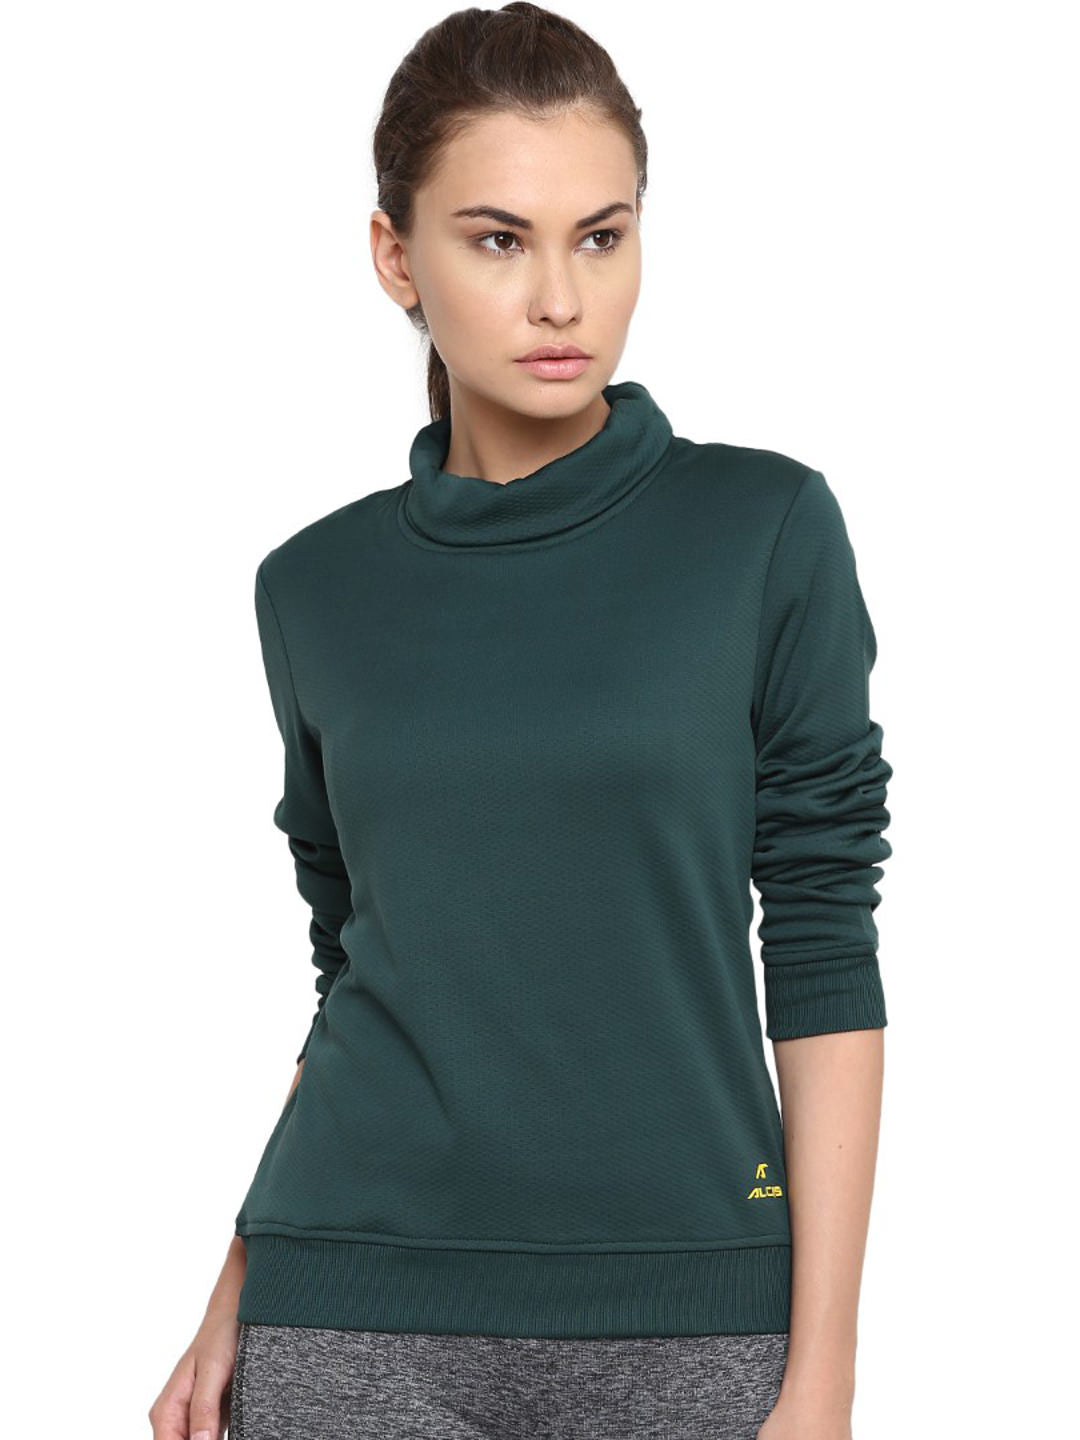 Alcis Women Green Solid Sweatshirt 133WSS193 133WSS193-S